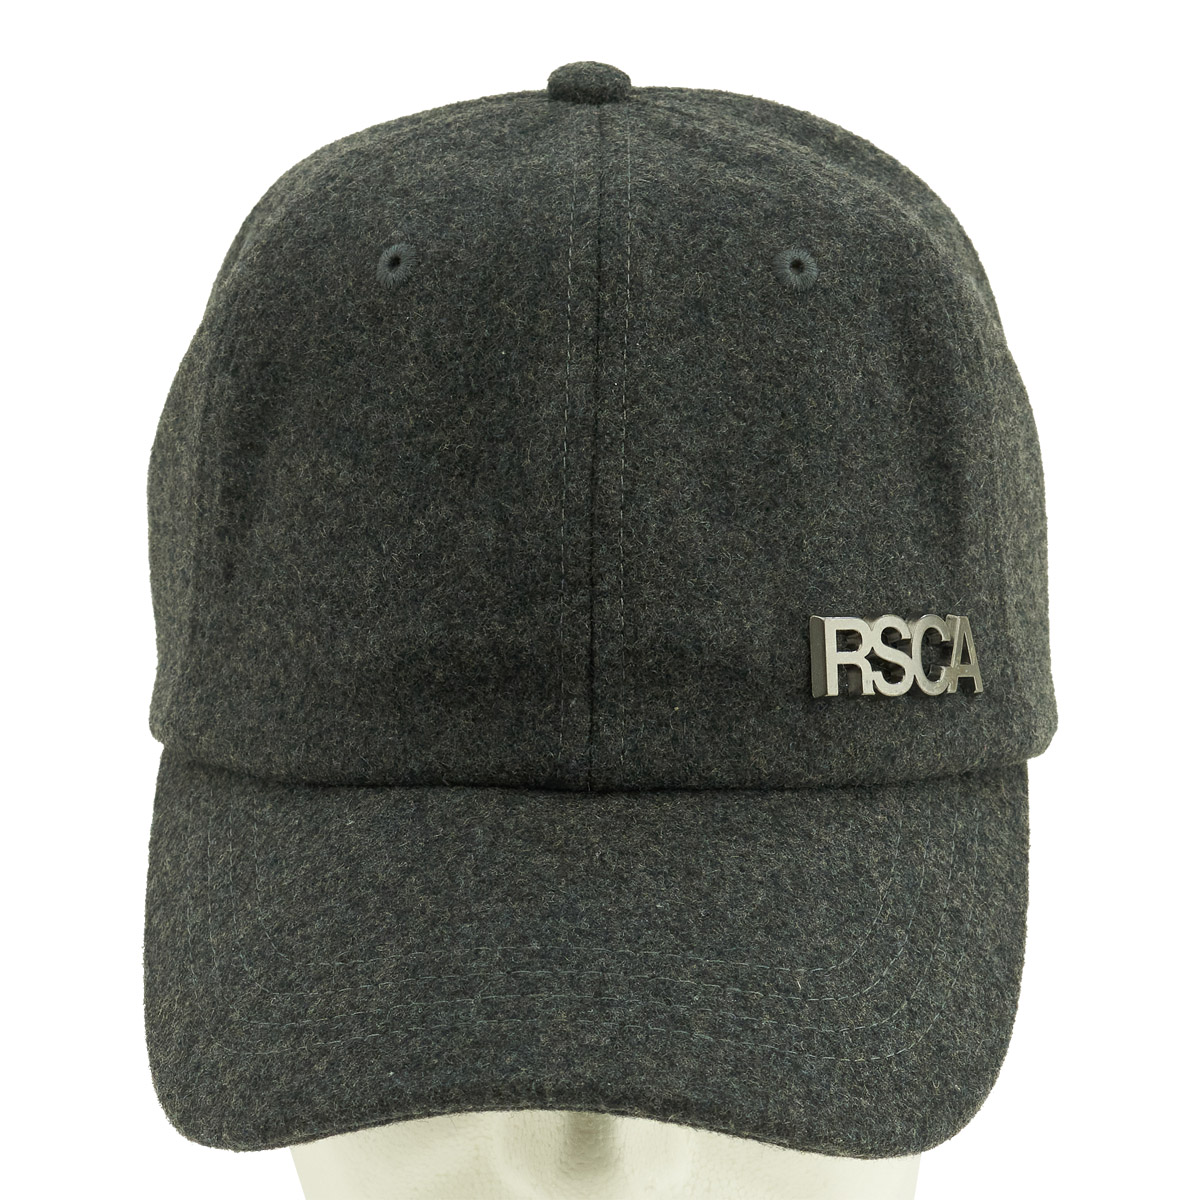 RSCA Cap Business